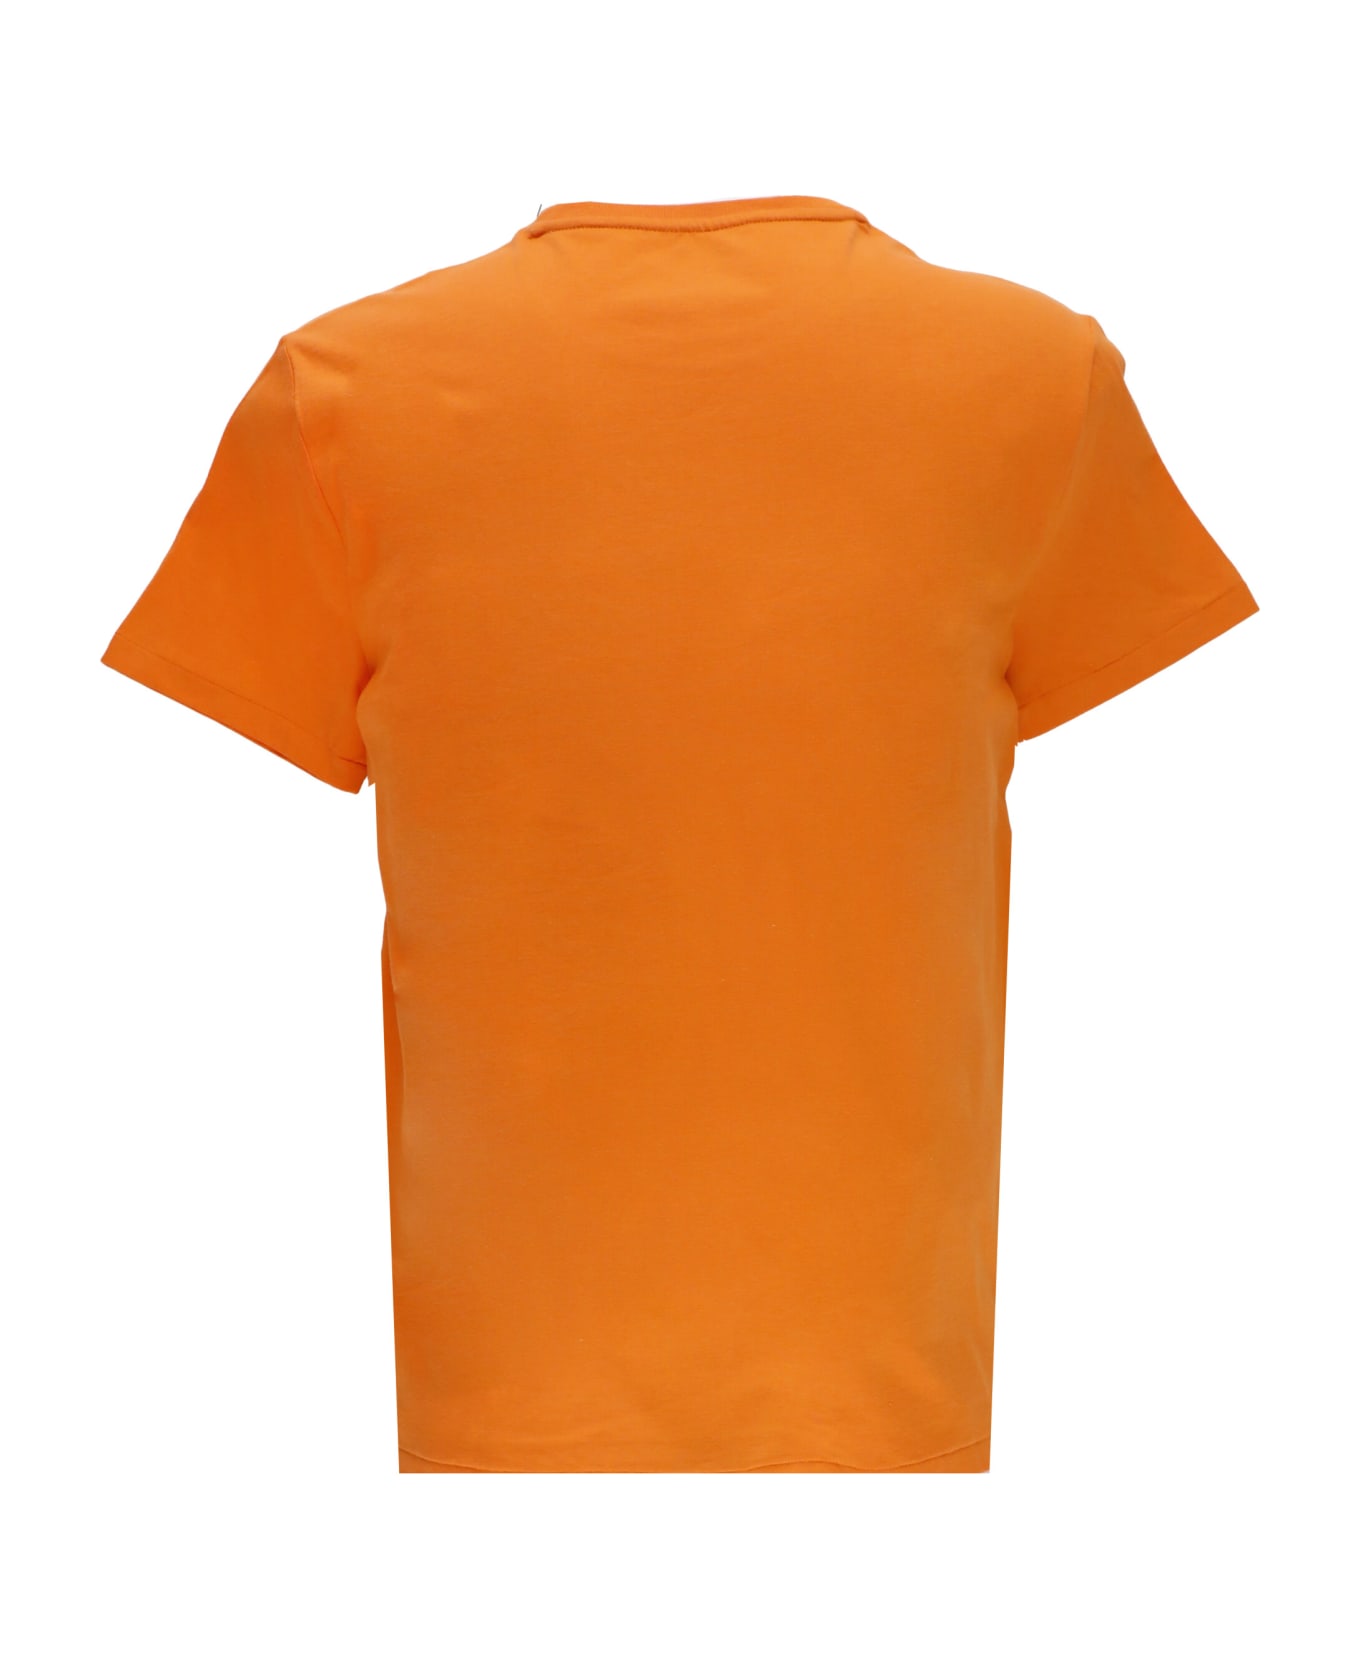 Ralph Lauren T-shirt With Pony - Orange